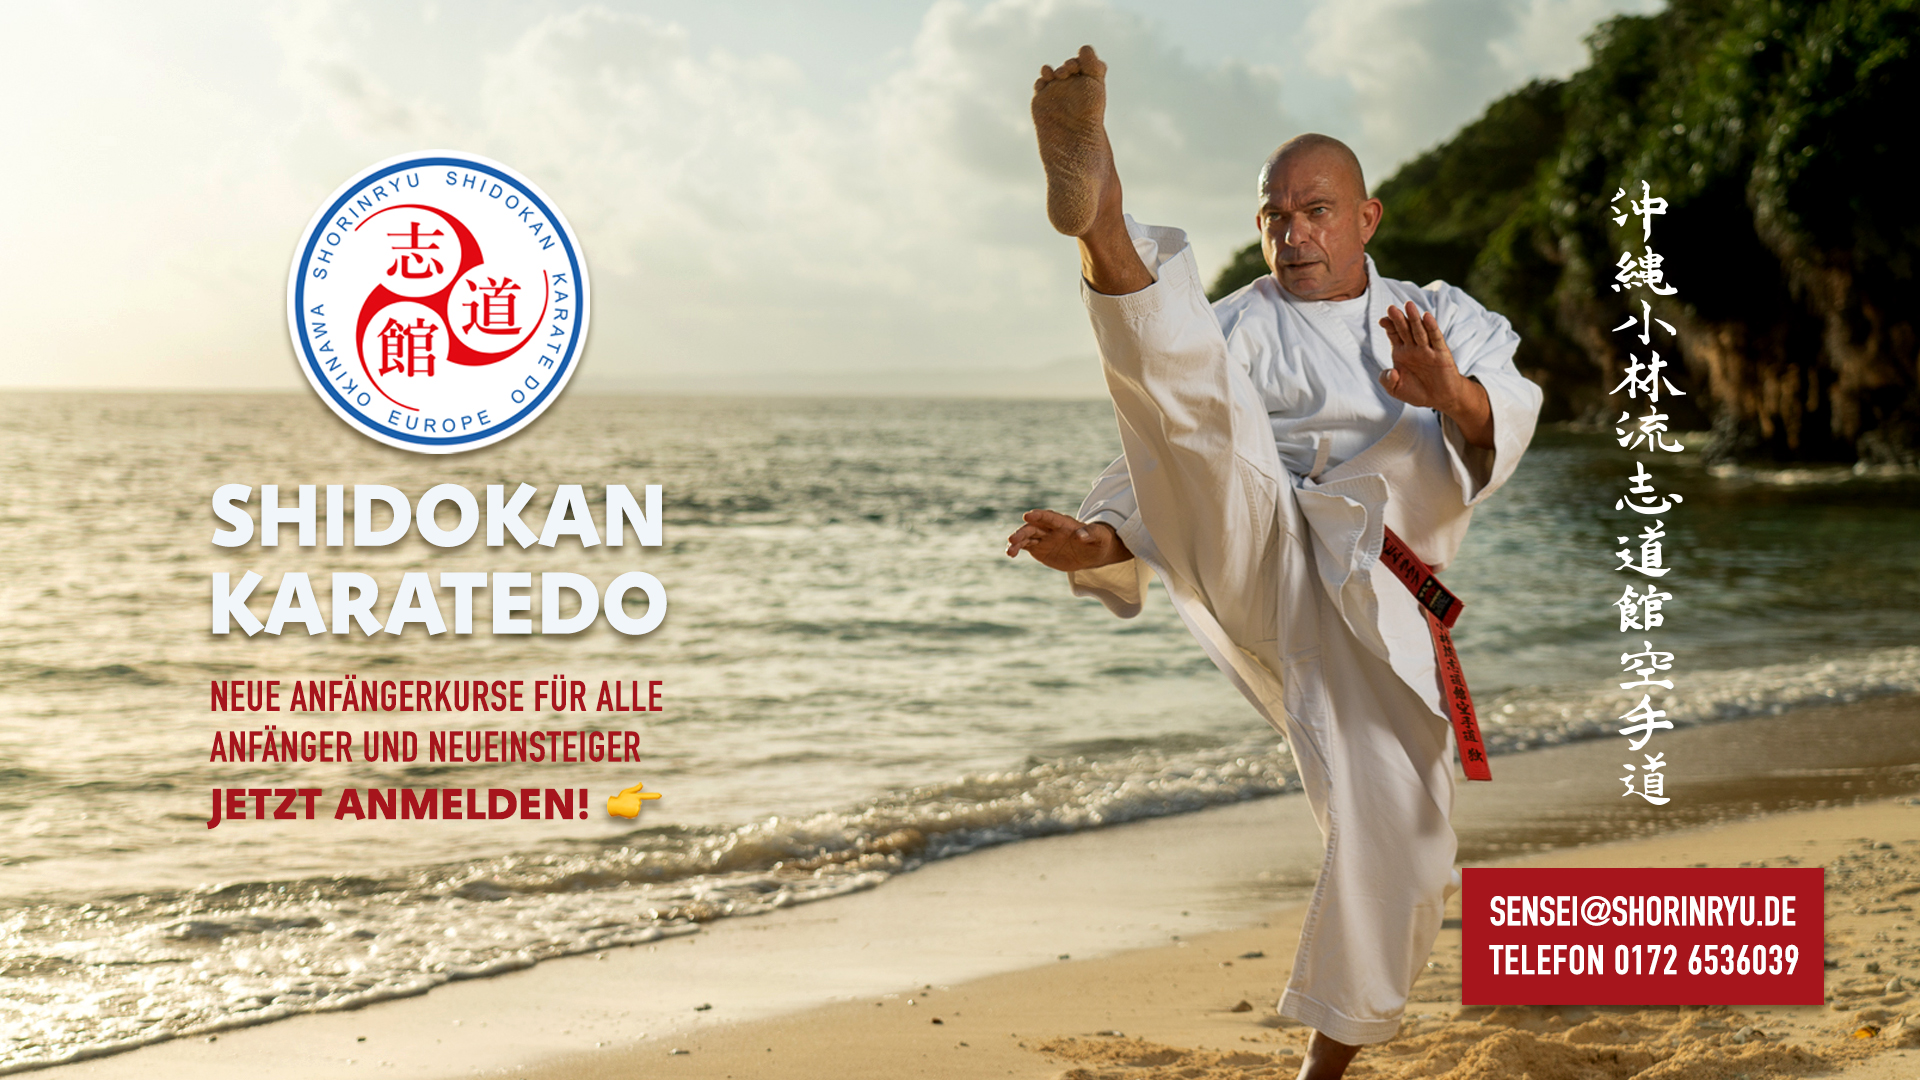 Aktion Neuer Karate Kurs Düsseldorf Trier